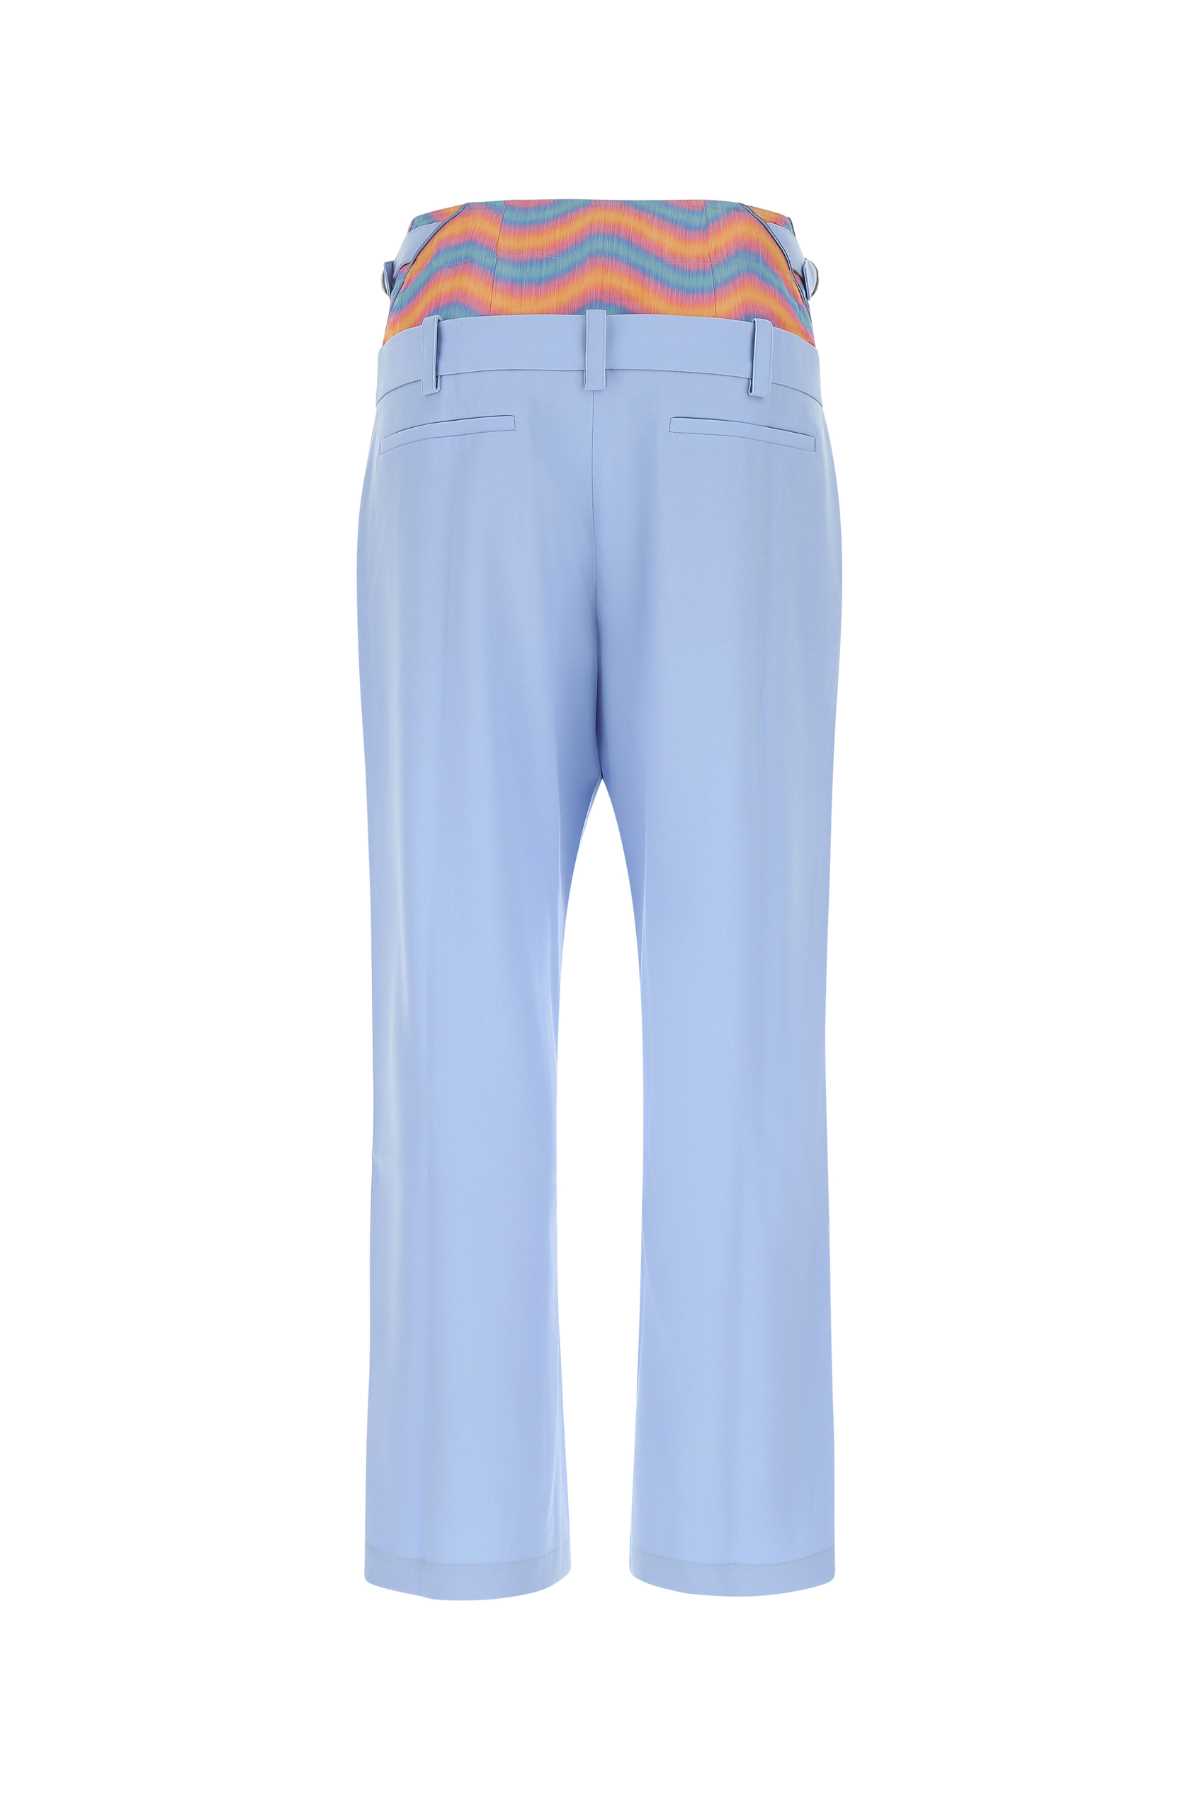 Shop Bluemarble Pastel Light Blue Wool Wide-leg Swim Pant